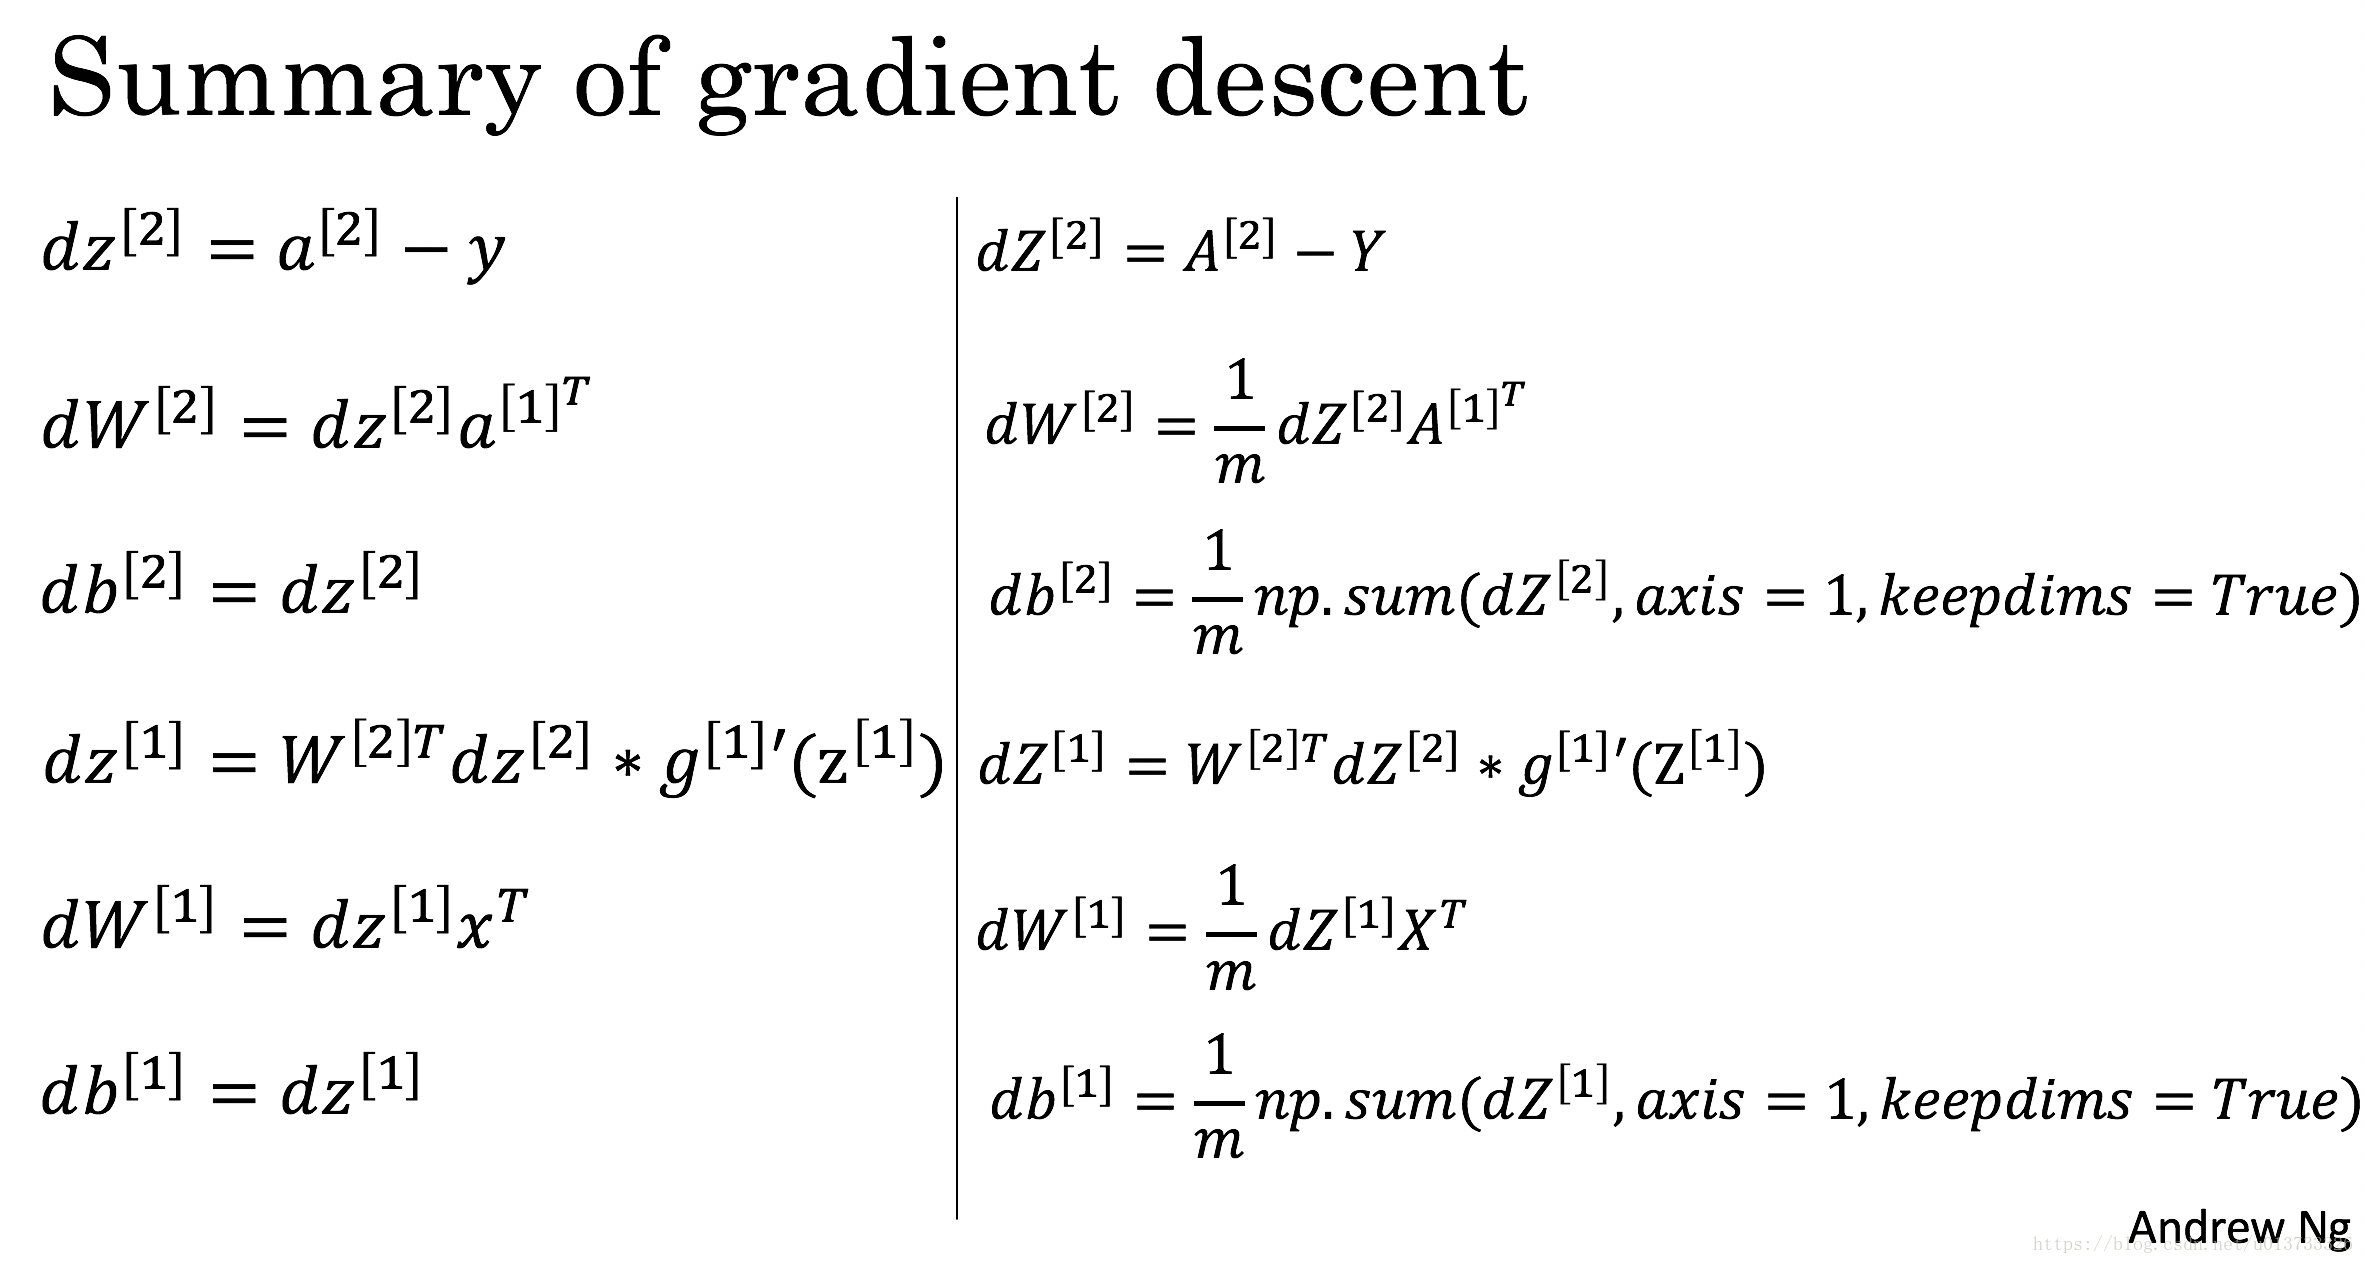 Summary of gradient desent